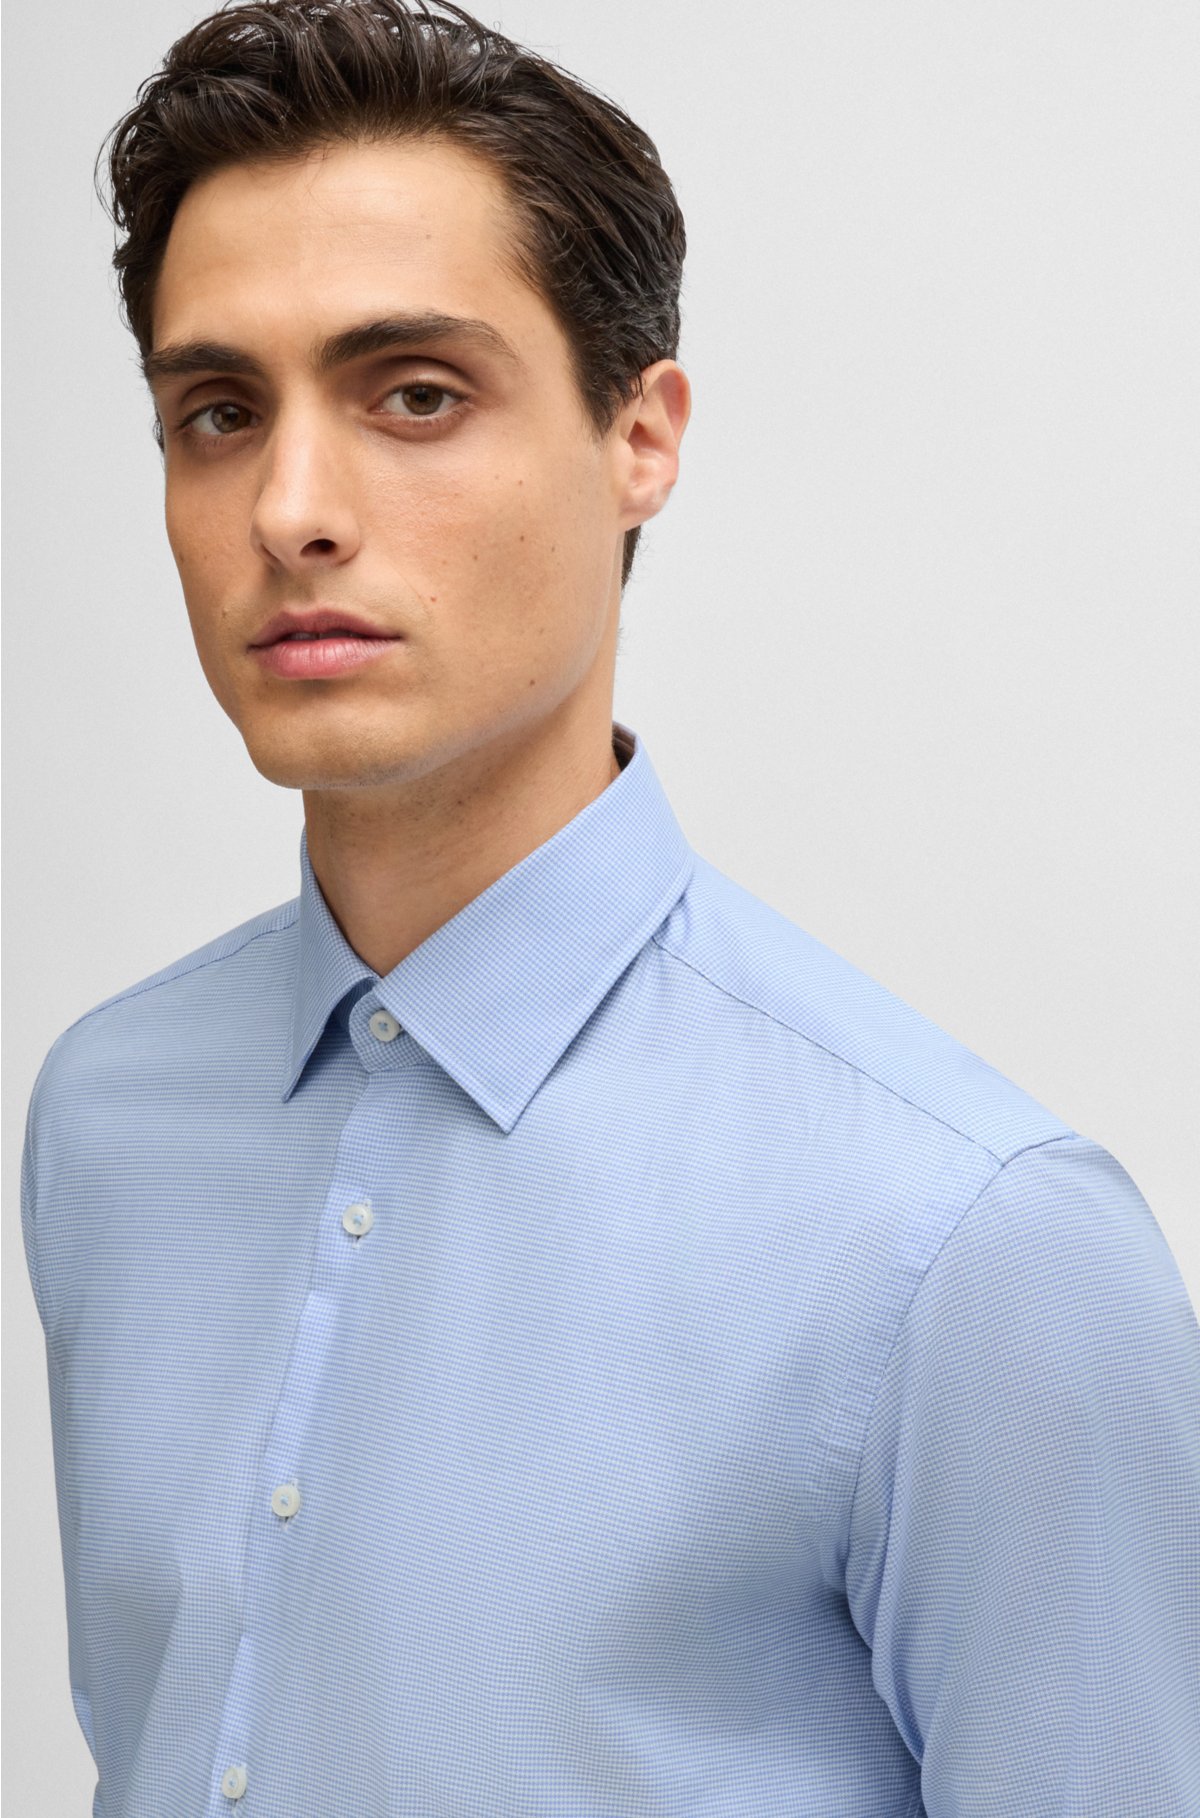 Regular-fit shirt in easy-iron pepita stretch cotton, Light Blue